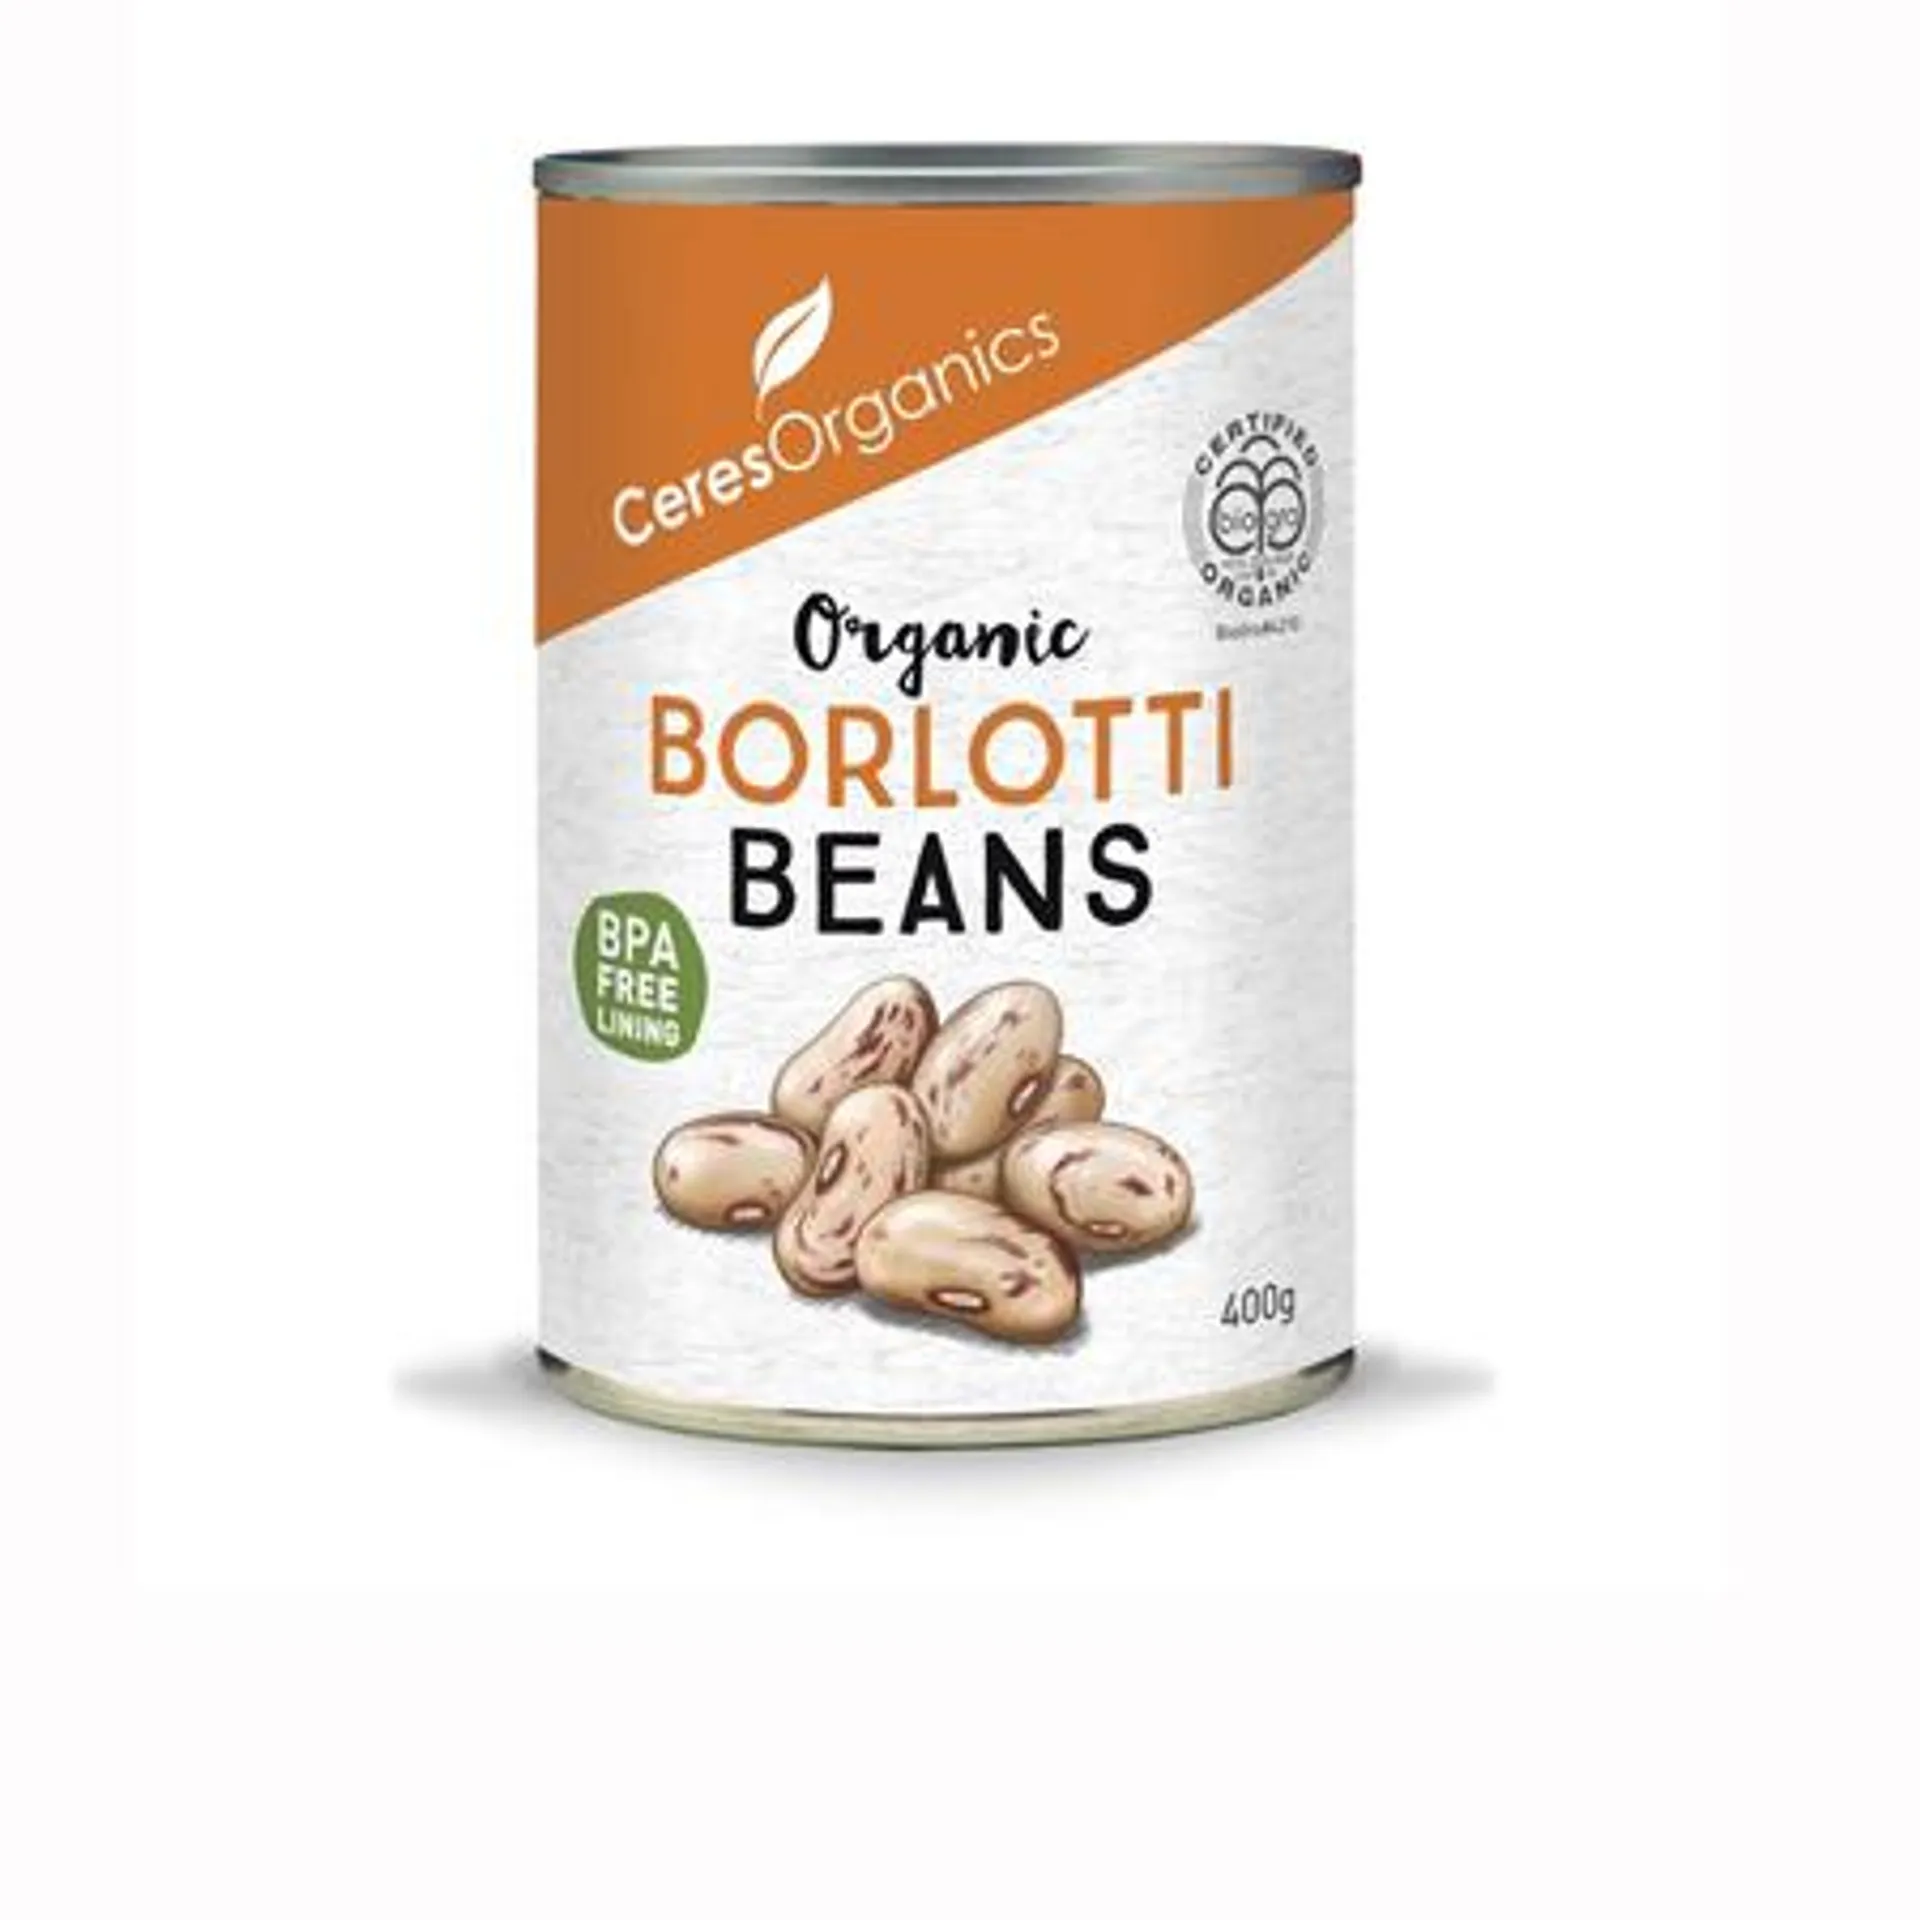 Ceres Organics Borlotti Beans